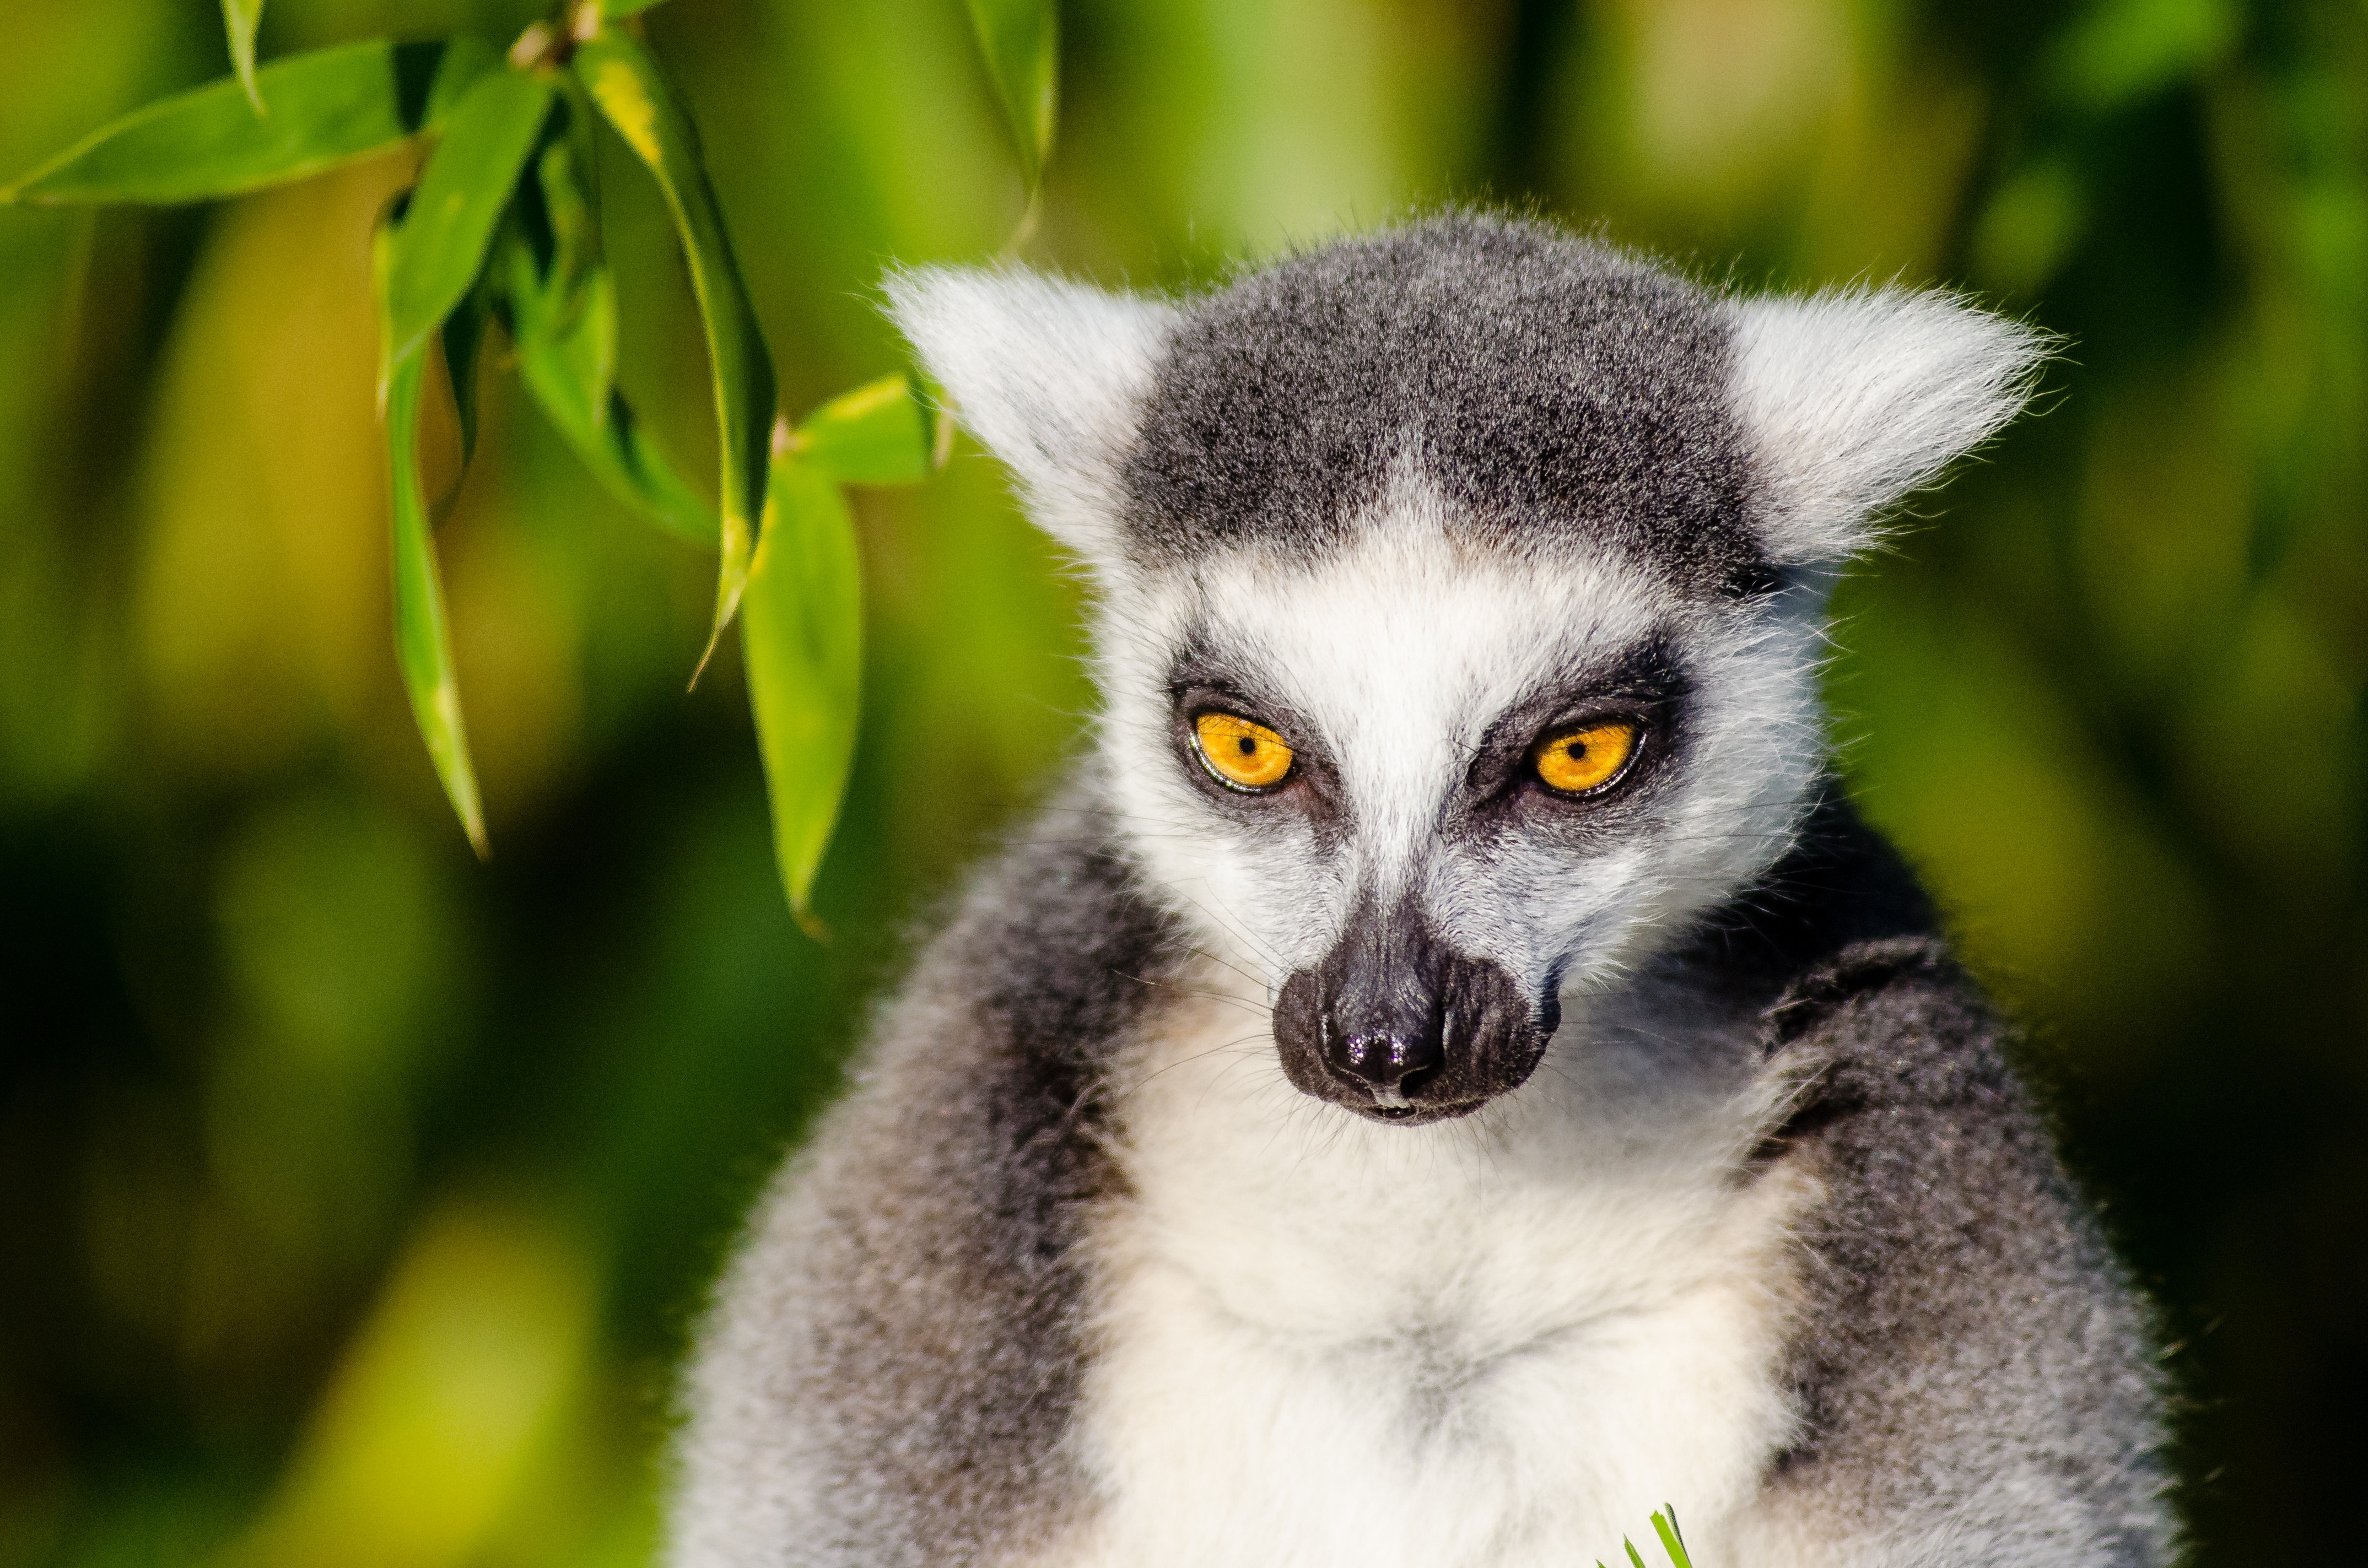 white and grey lemur close up photo at daytime